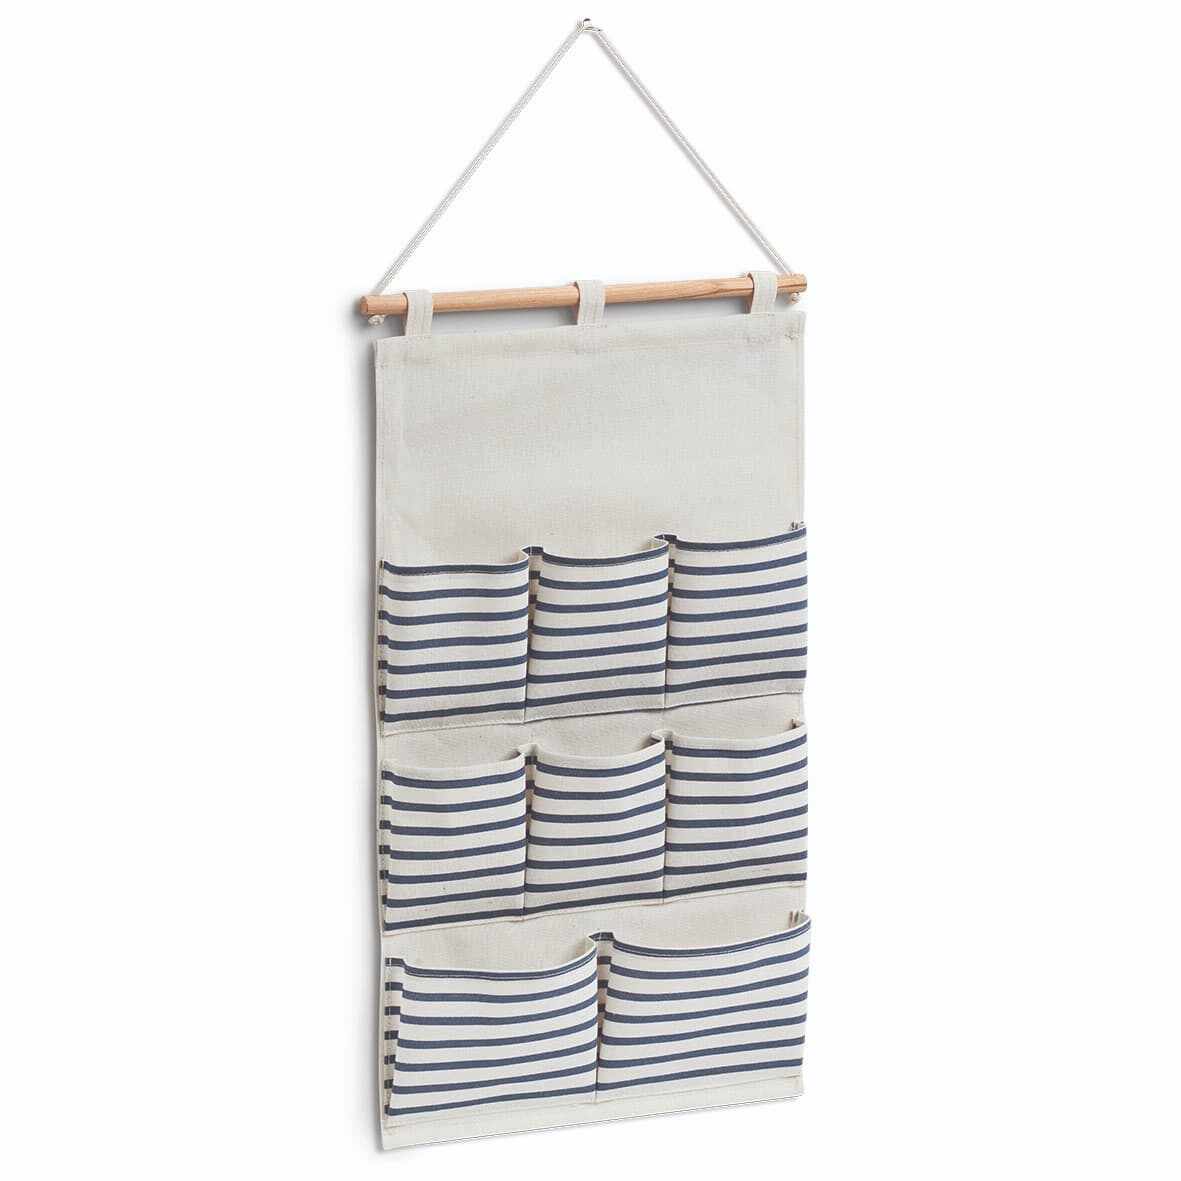 Organizator textil de perete cu 8 compartimente, Stripes Alb / Bleumarin, l35xH60 cm